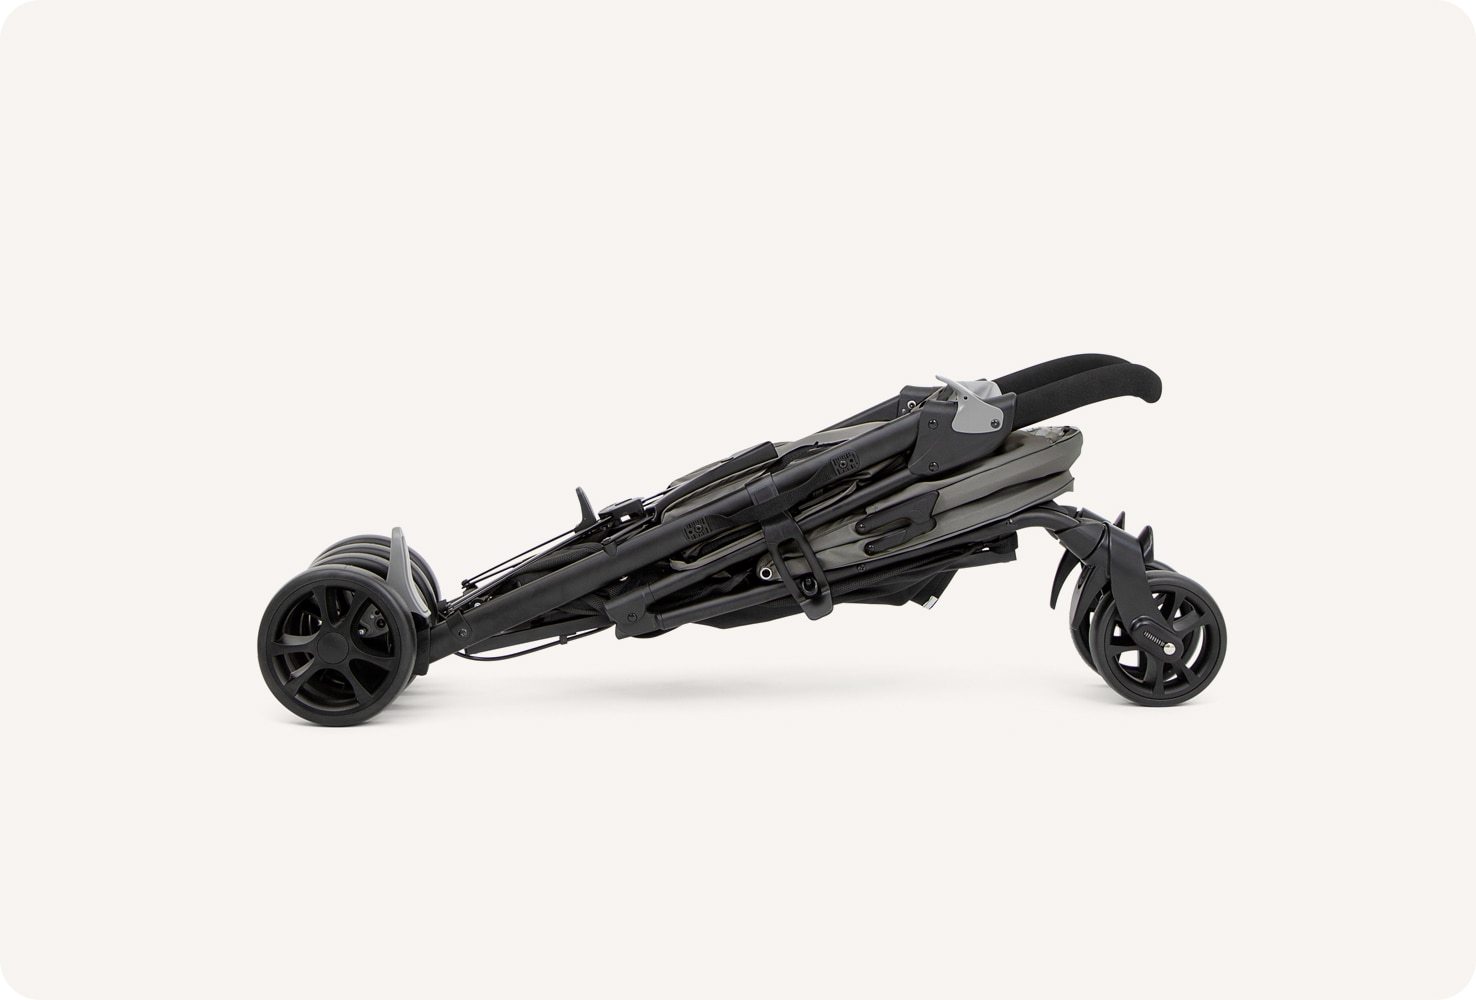  A folded Joie Brisk LX stroller in gray.